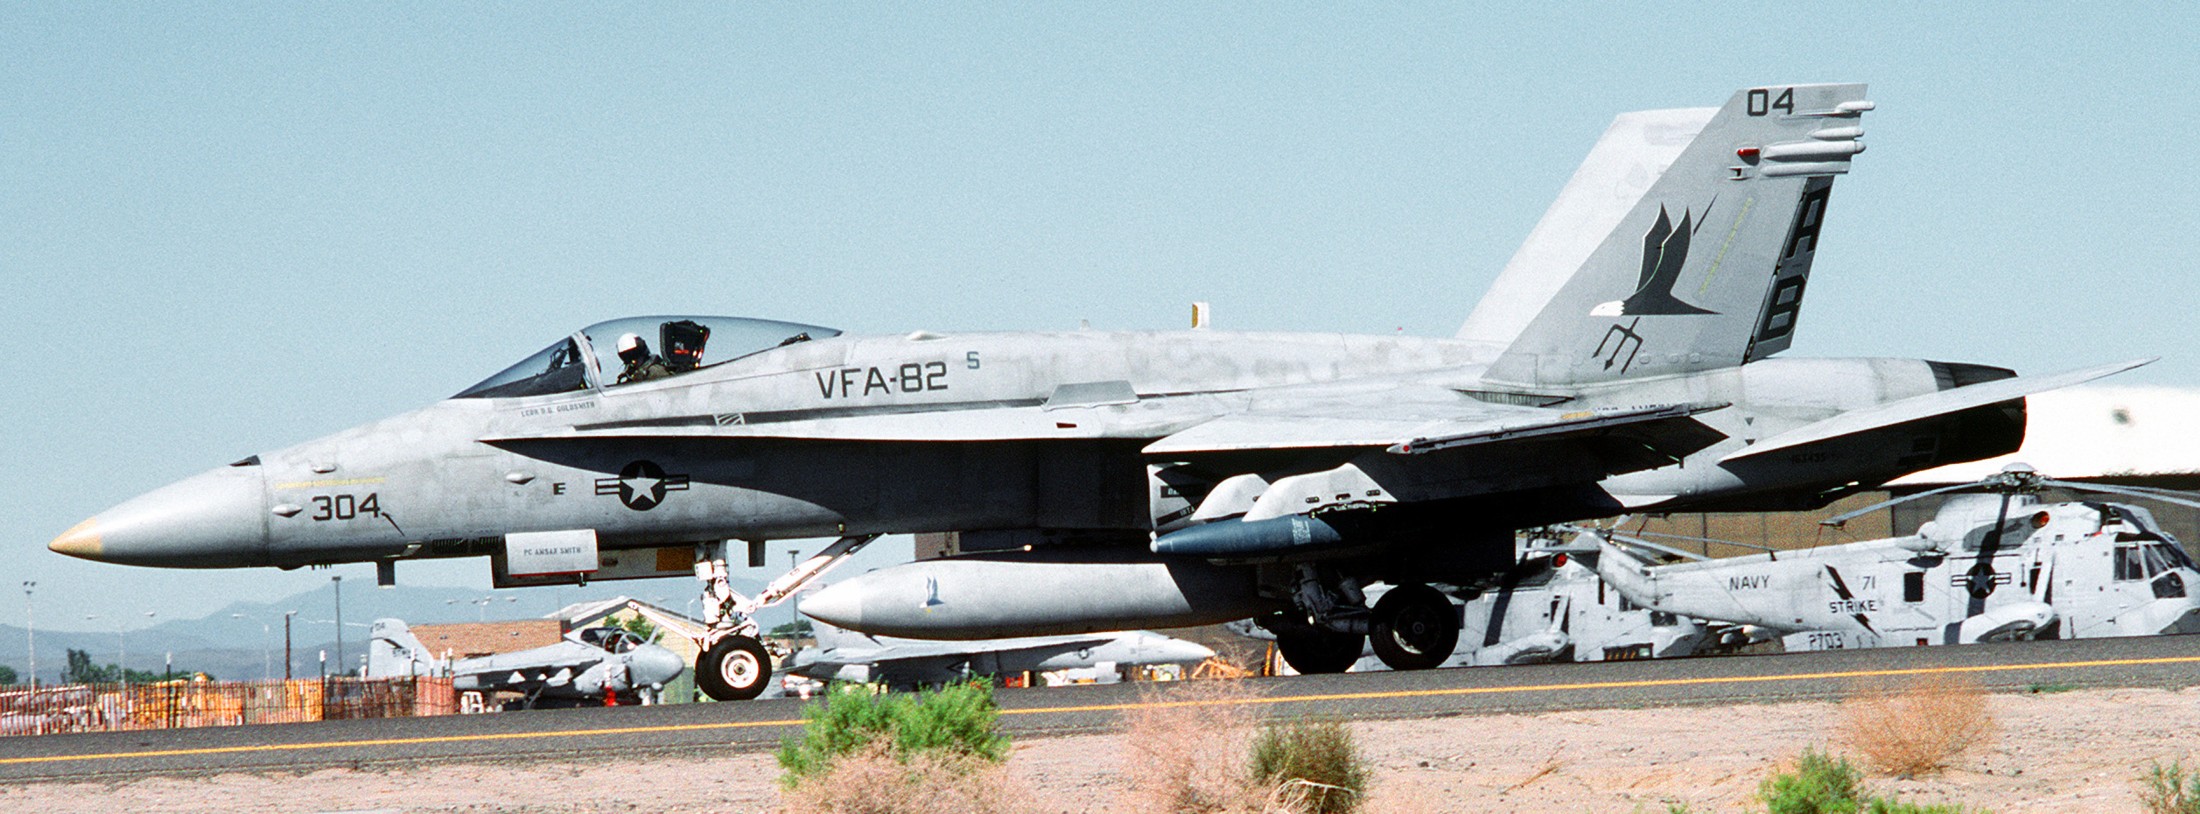 vfa-82 marauders f/a-18c hornet carrier air wing cvw-1 uss america cv-66